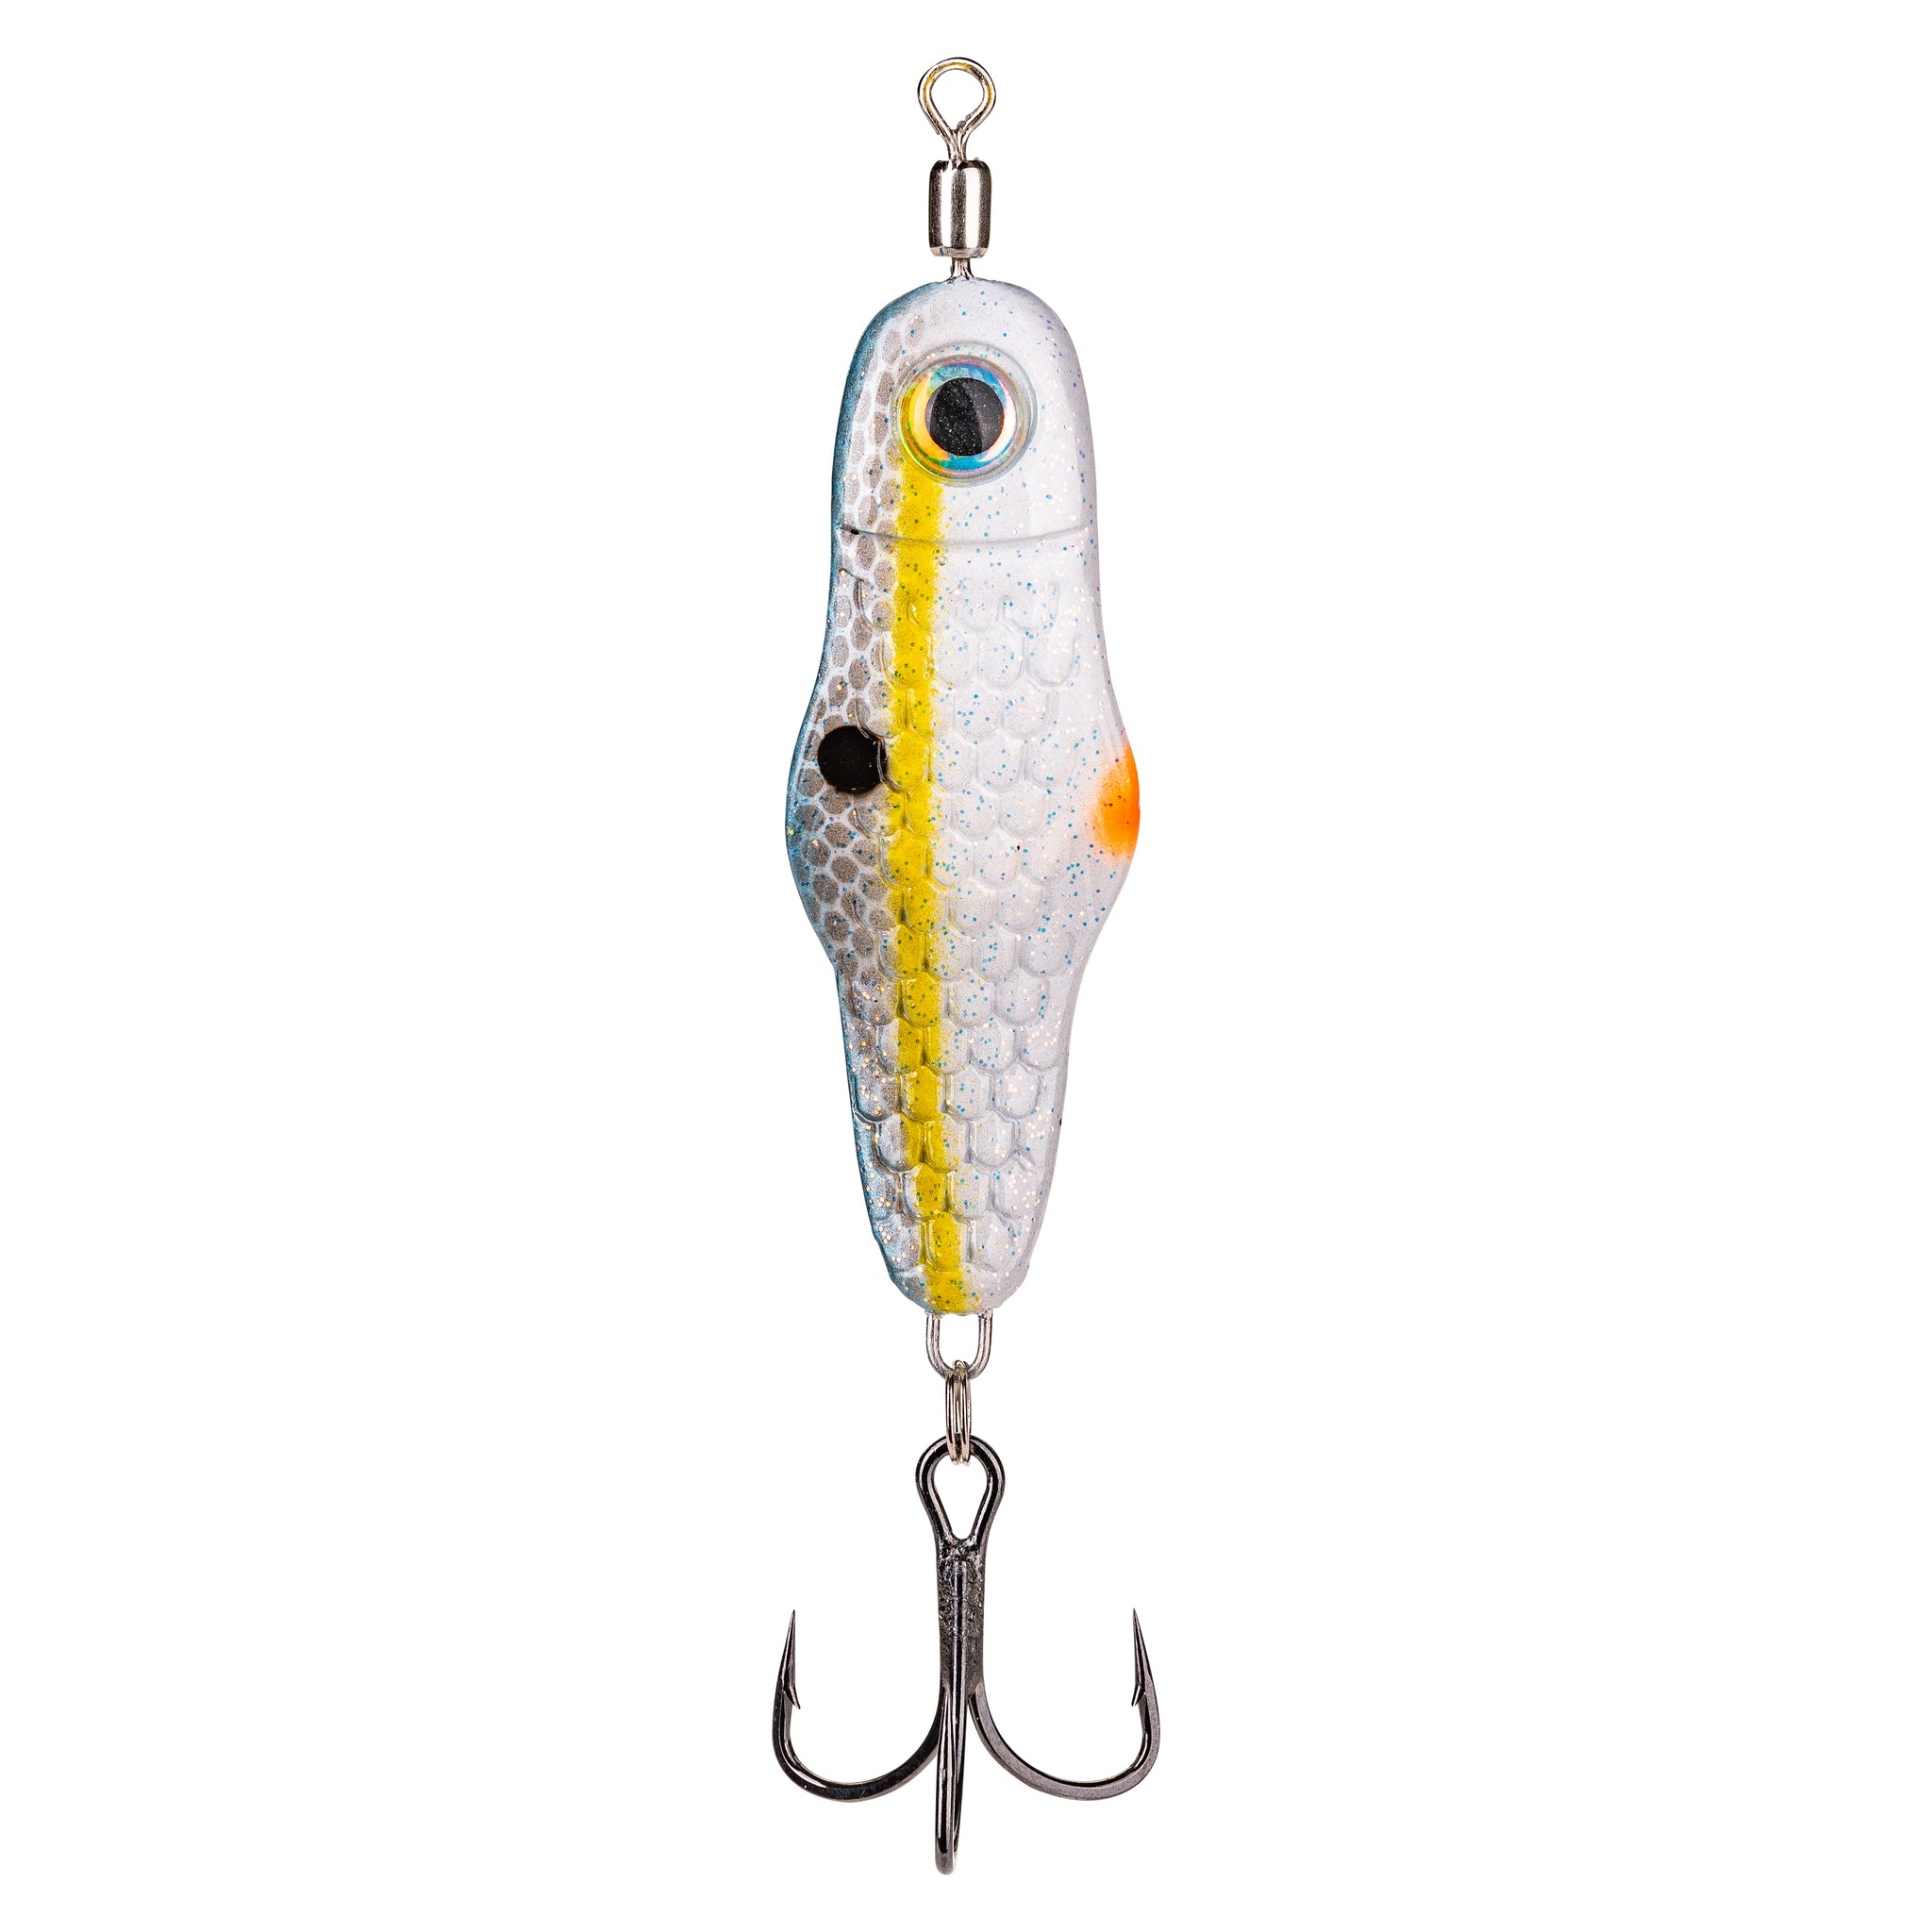 Fishing Tackle Direct – Fishing Tackle Shop Carlow